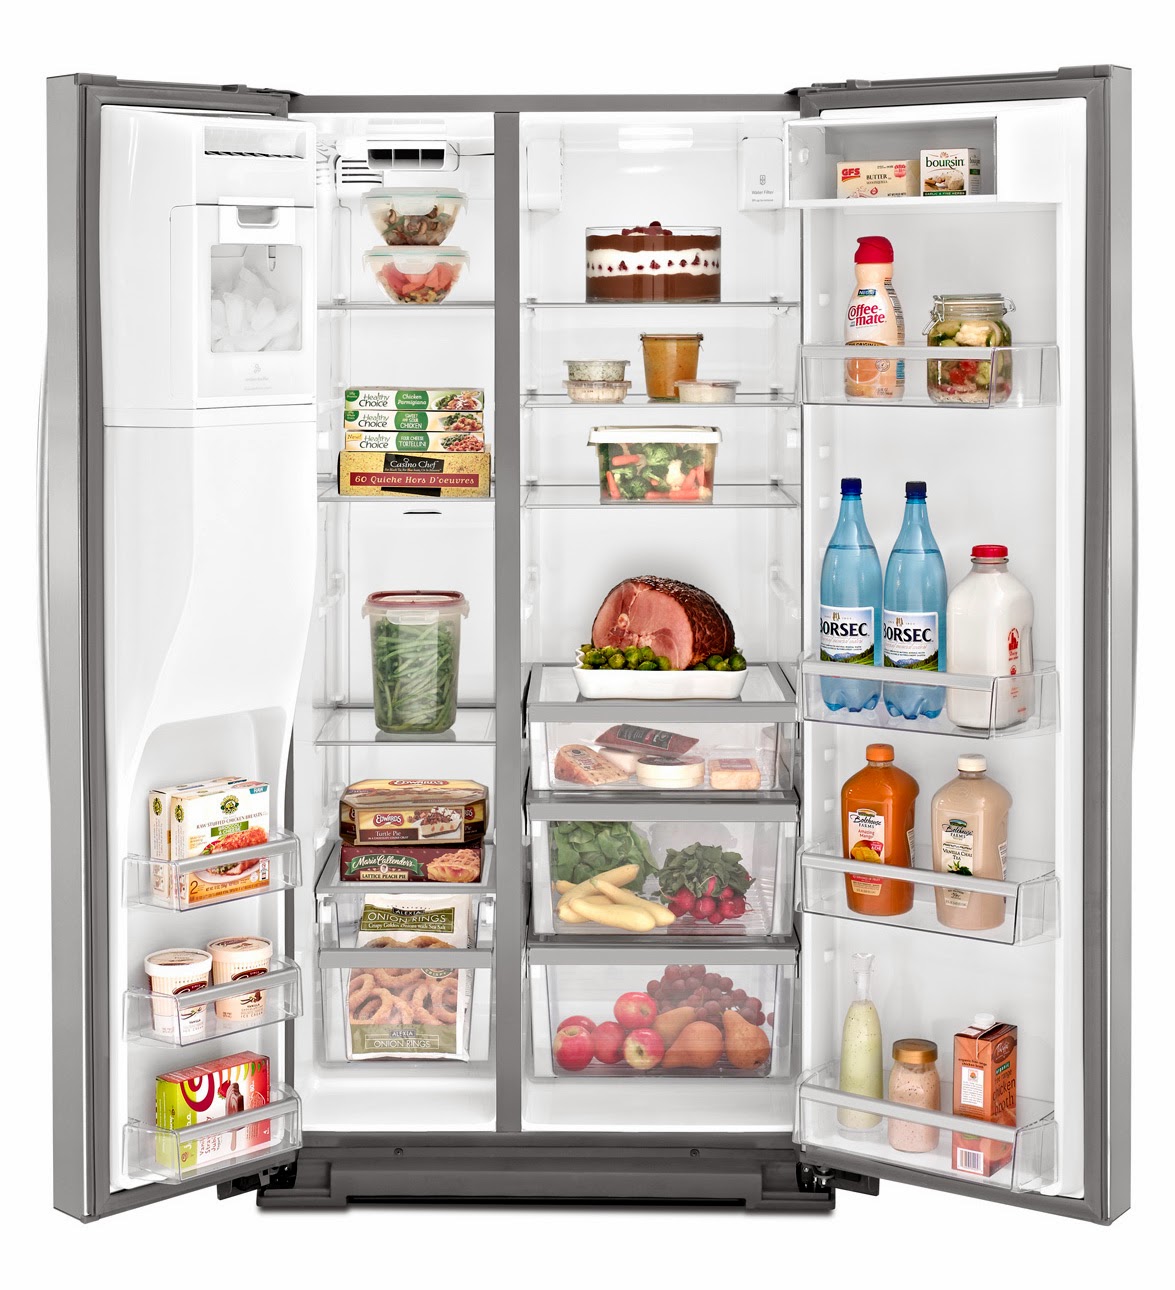 whirlpool-refrigerator-brand-energy-star-wrs537siam-refrigerator